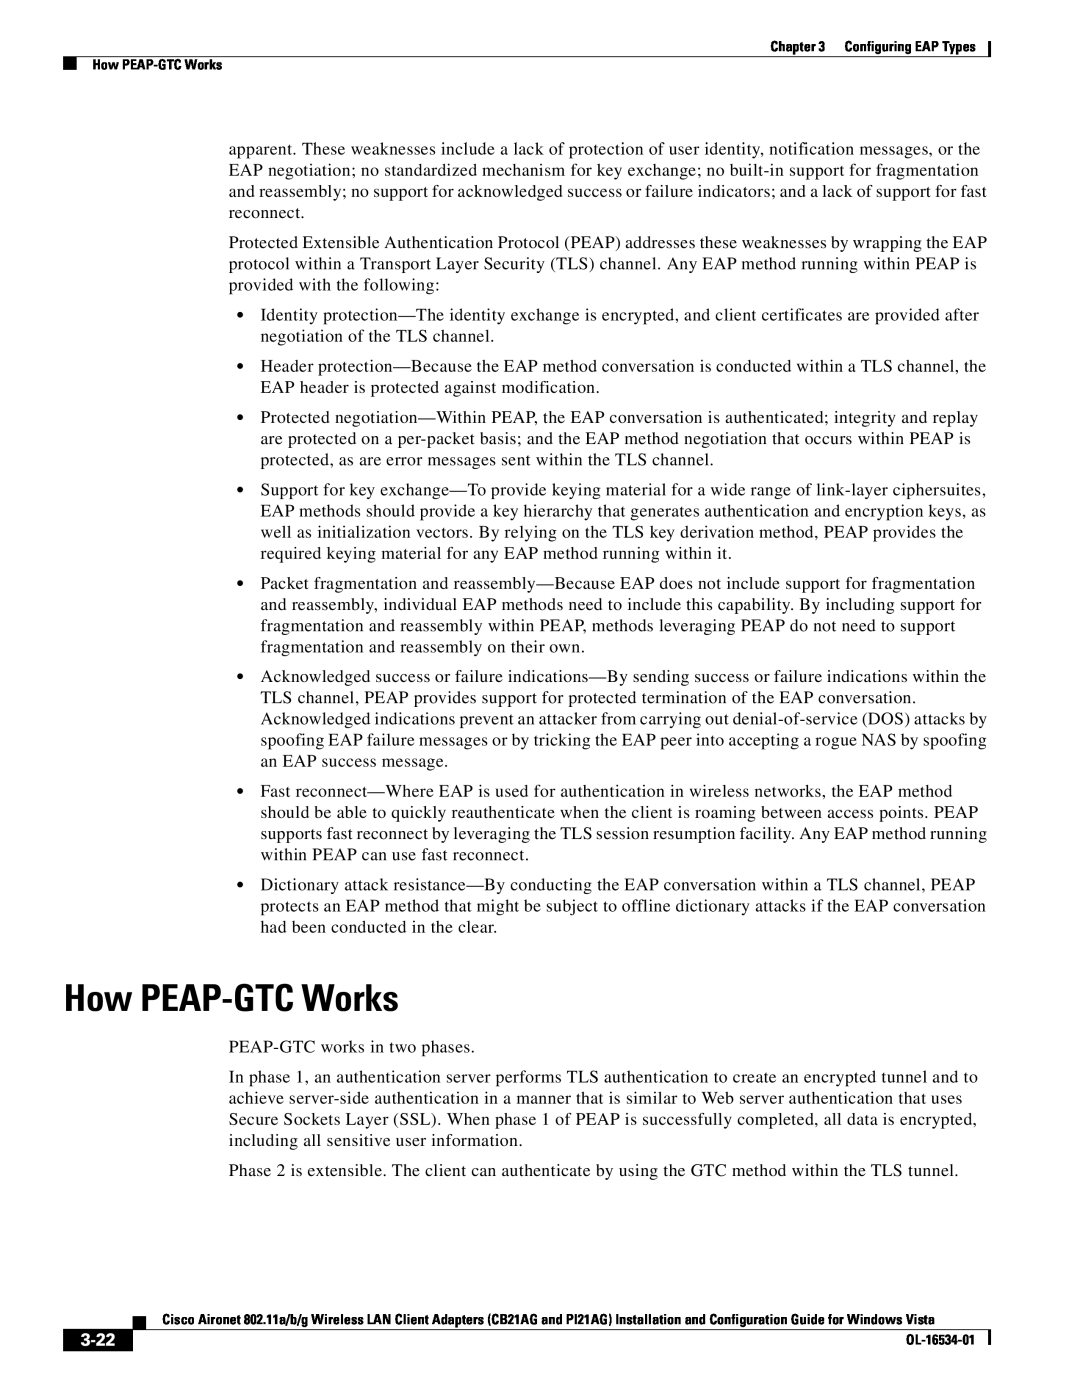 Cisco Systems PI21AG, CB21AG manual How PEAP-GTC Works, 3-22 